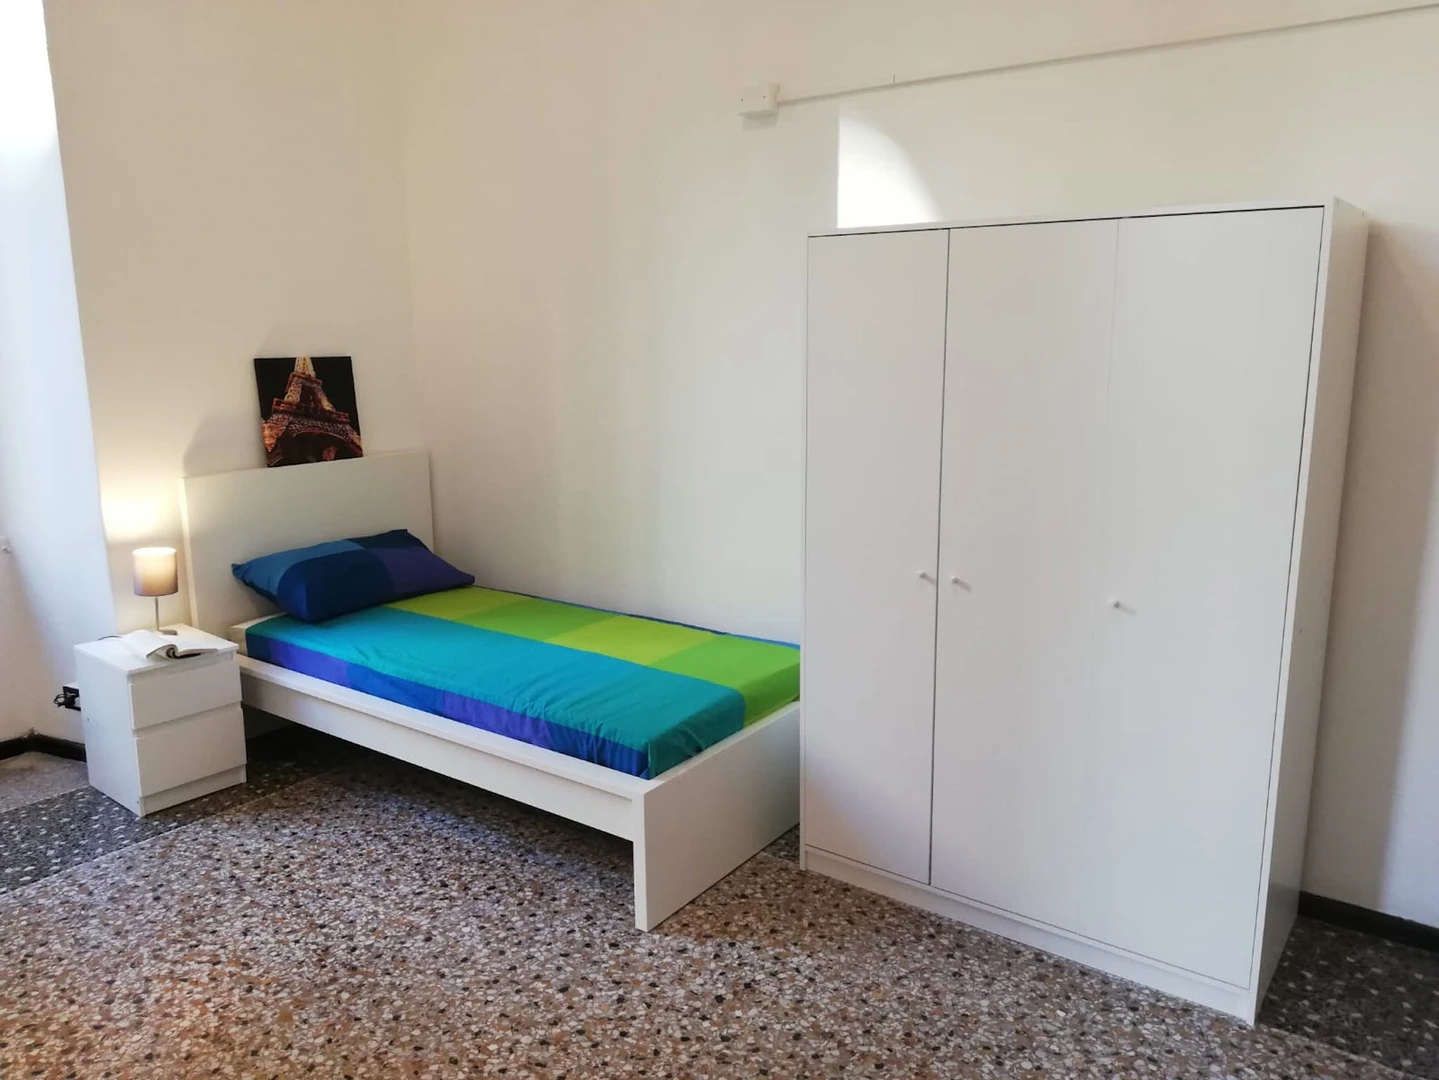 Chambre individuelle lumineuse à Gênes